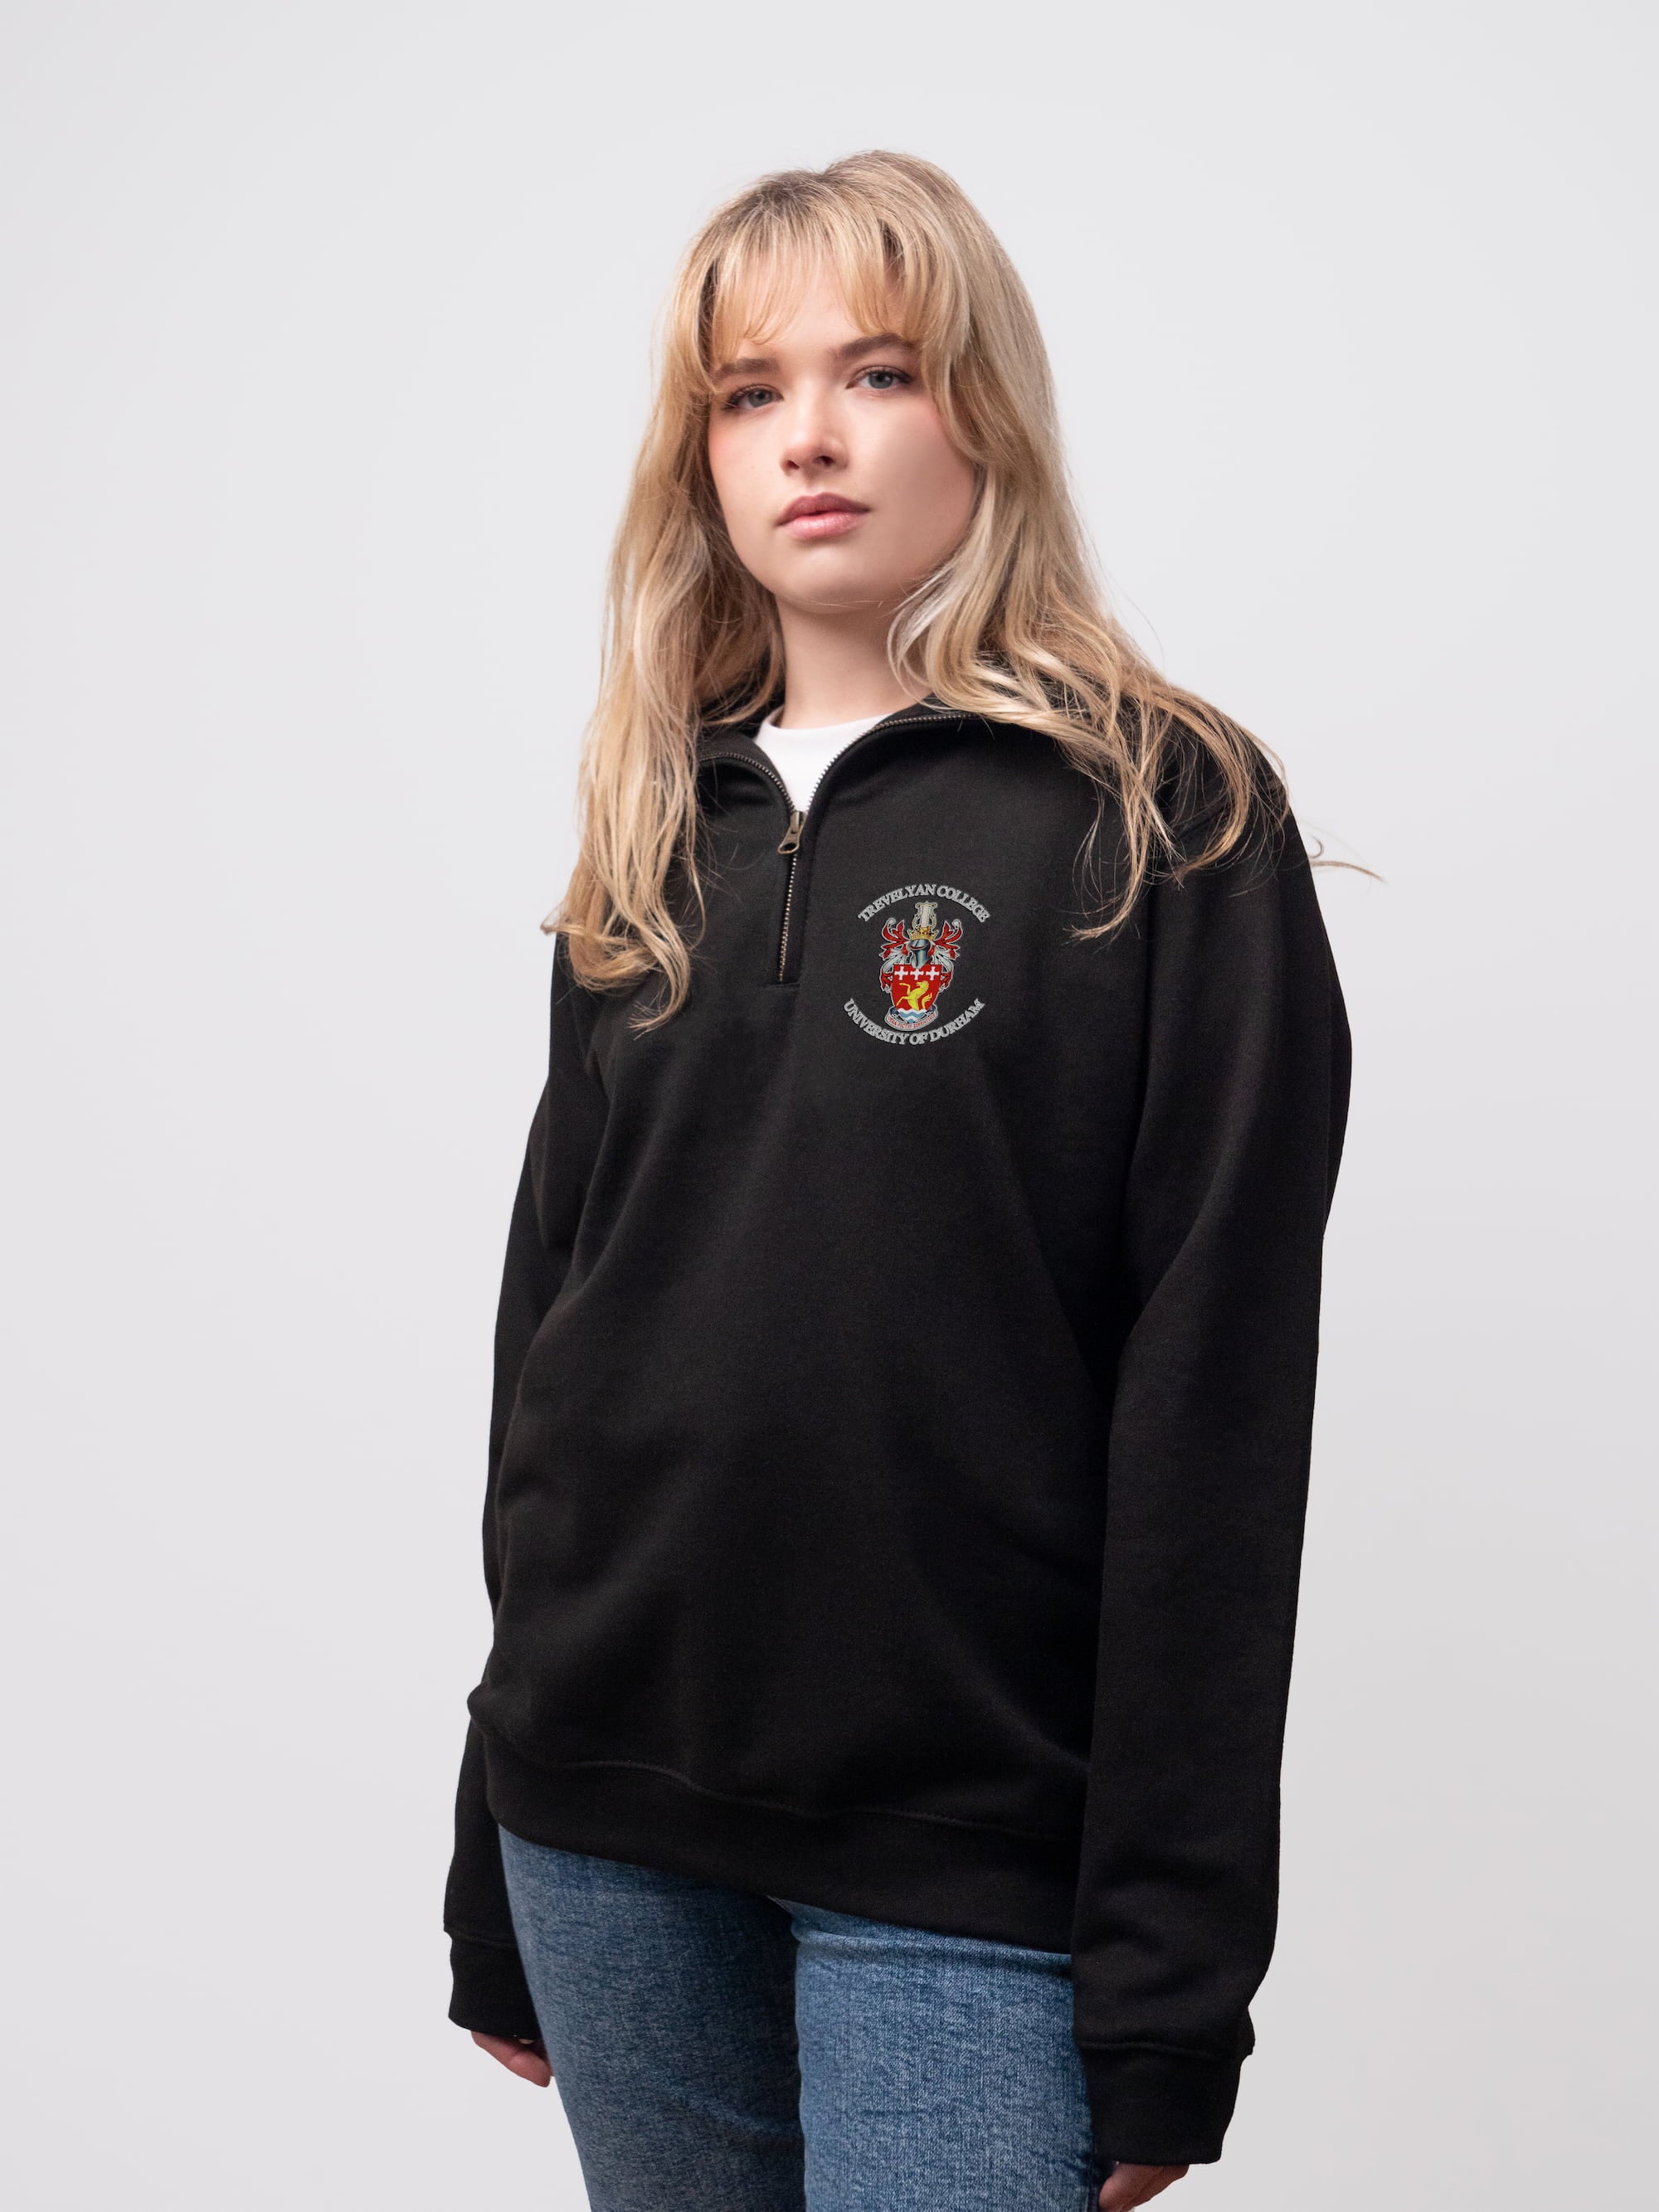 Trevelyan student wearing a black 1/4 zip sweatshirt 